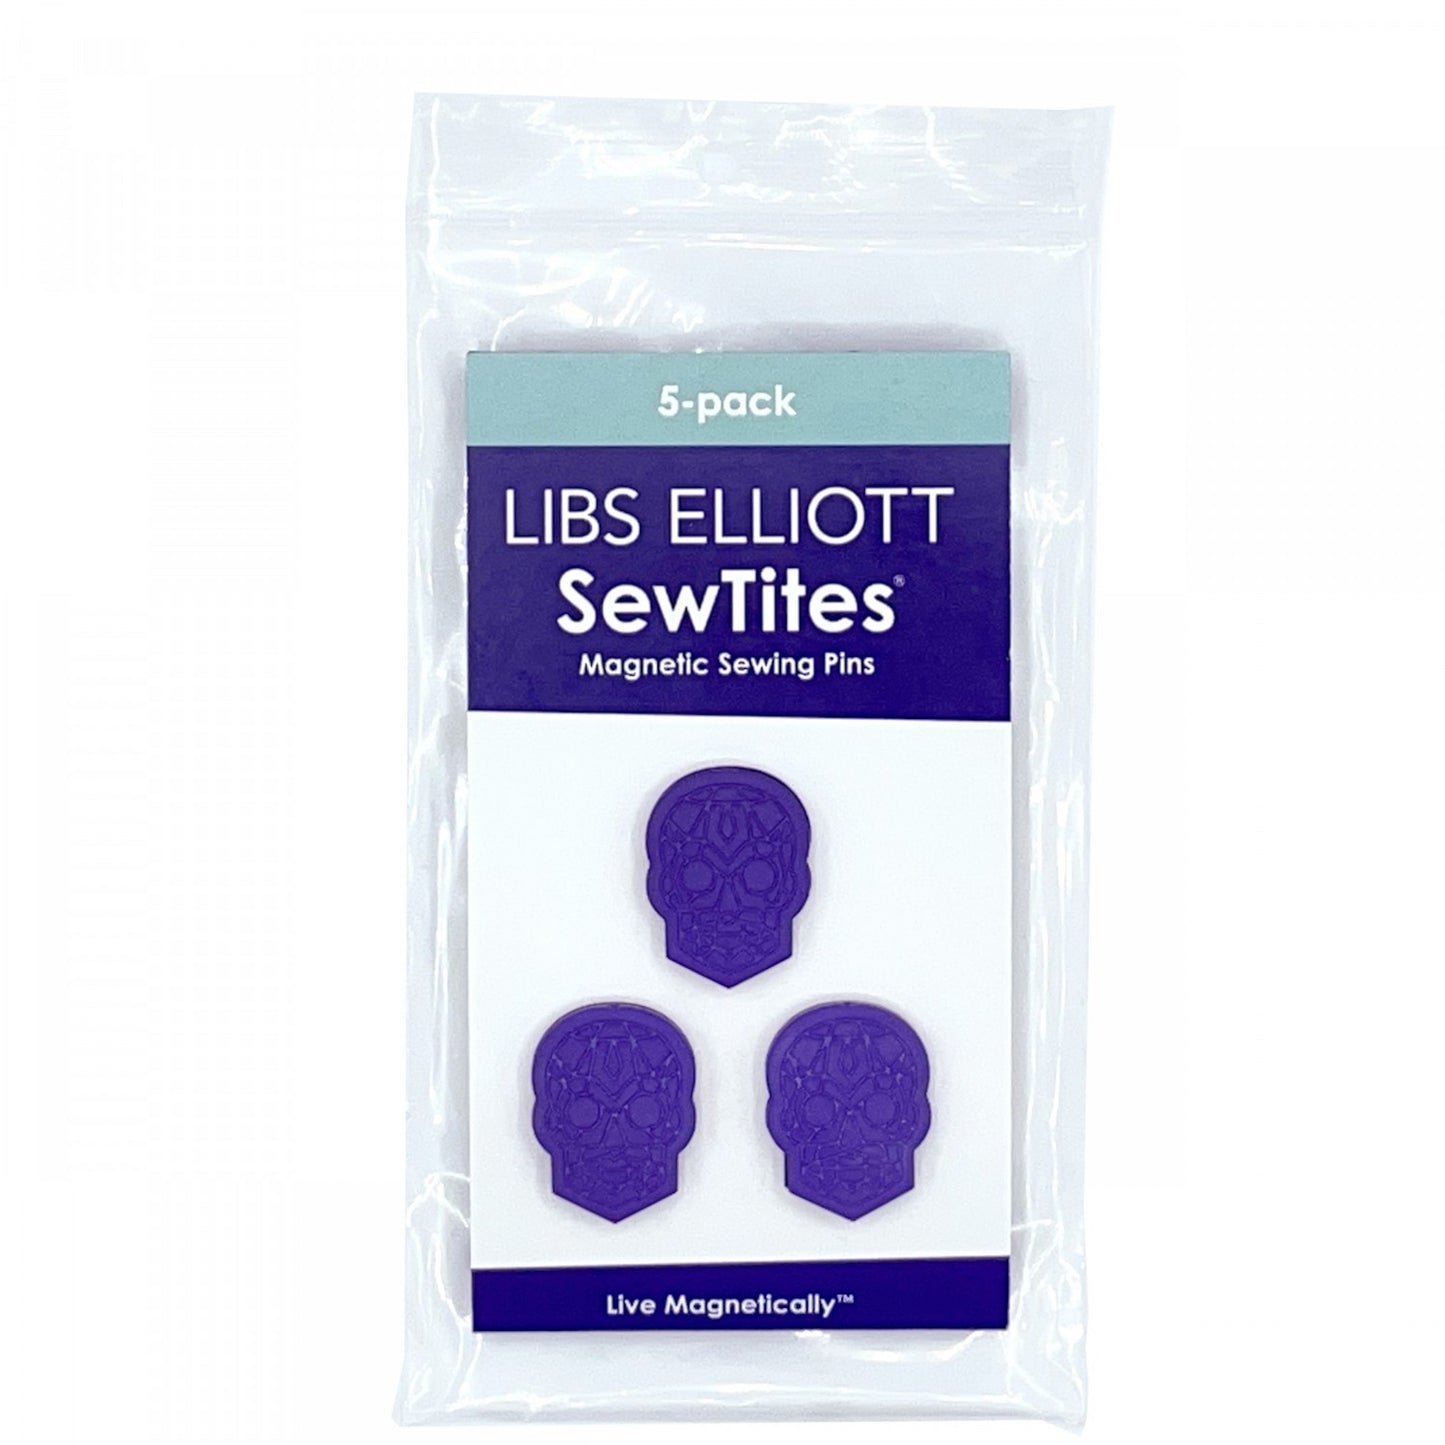 Libs Elliott SewTites- Watcher Magnetic Sewing Pins 5 Pack